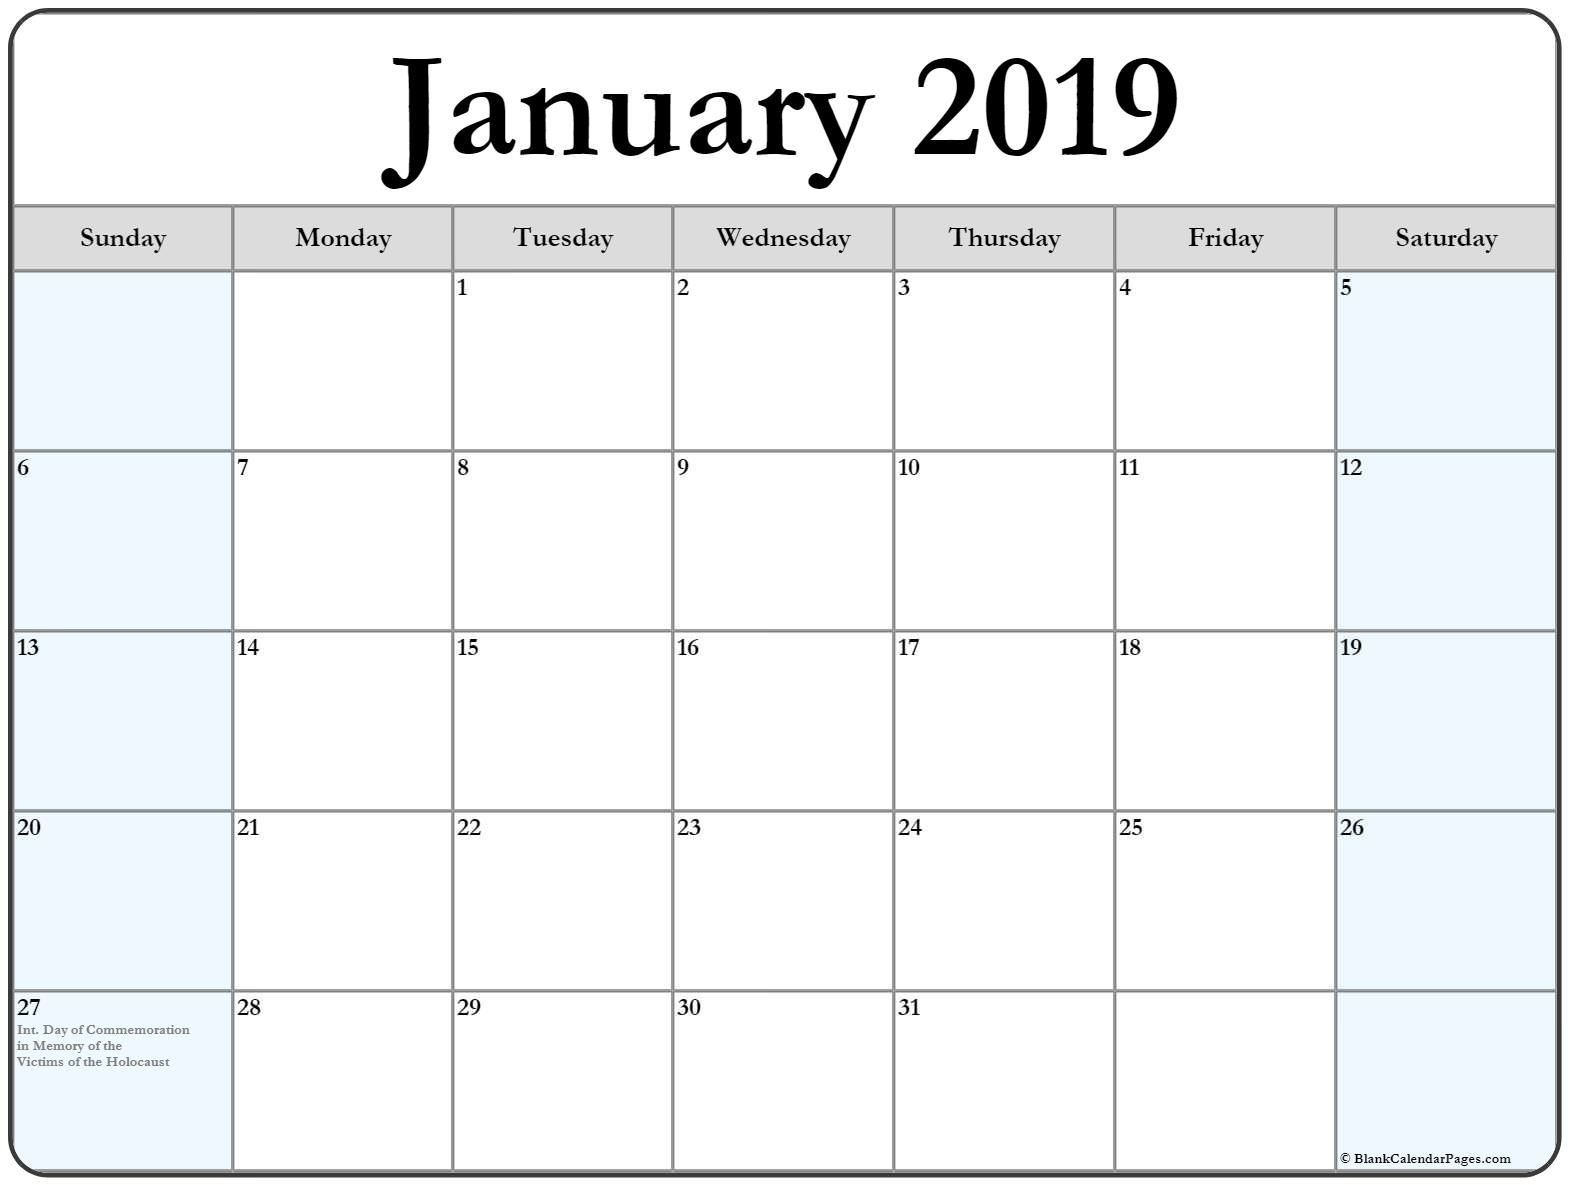 january 2019 calendar with international holidays | holiday